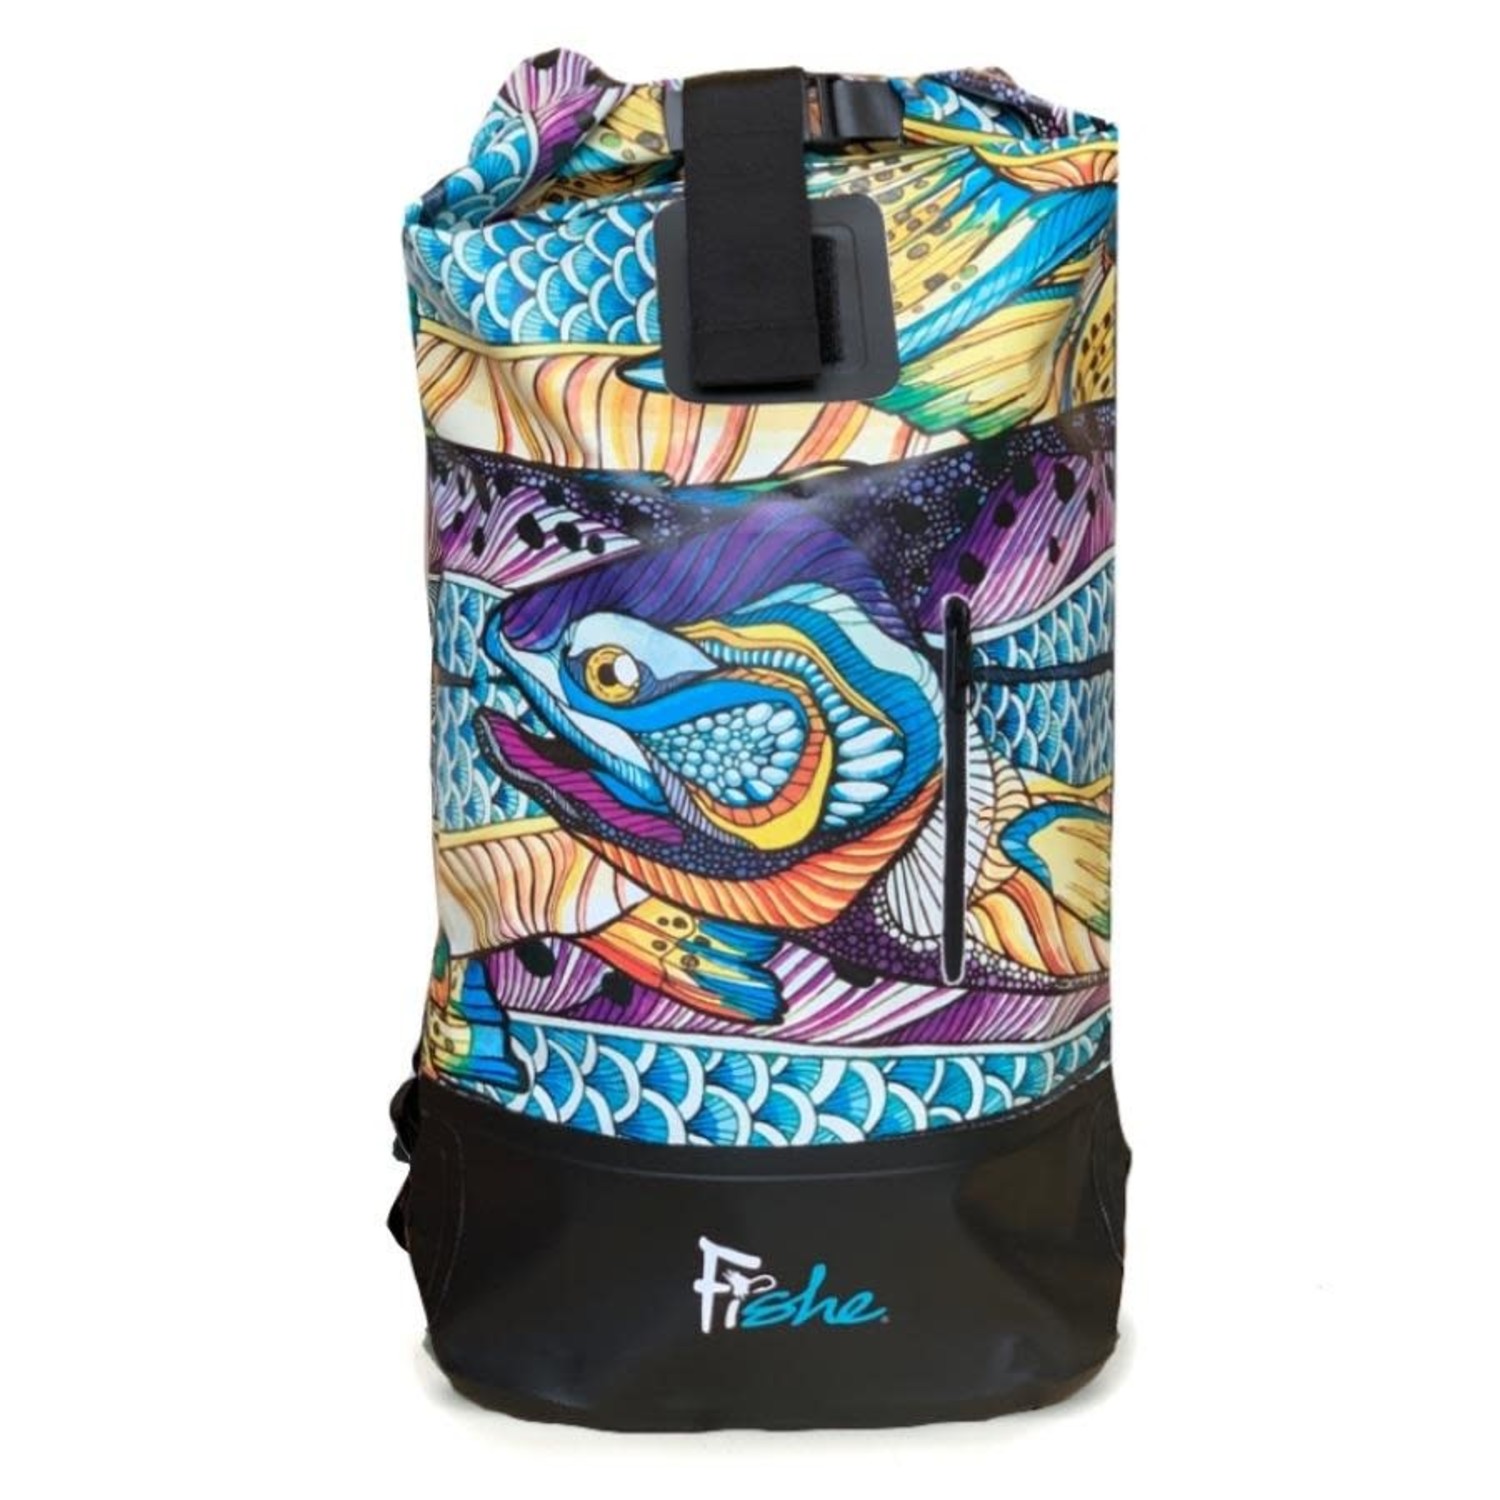 Fishe Wear Fishe Kaleido King Dry Bag Backpack